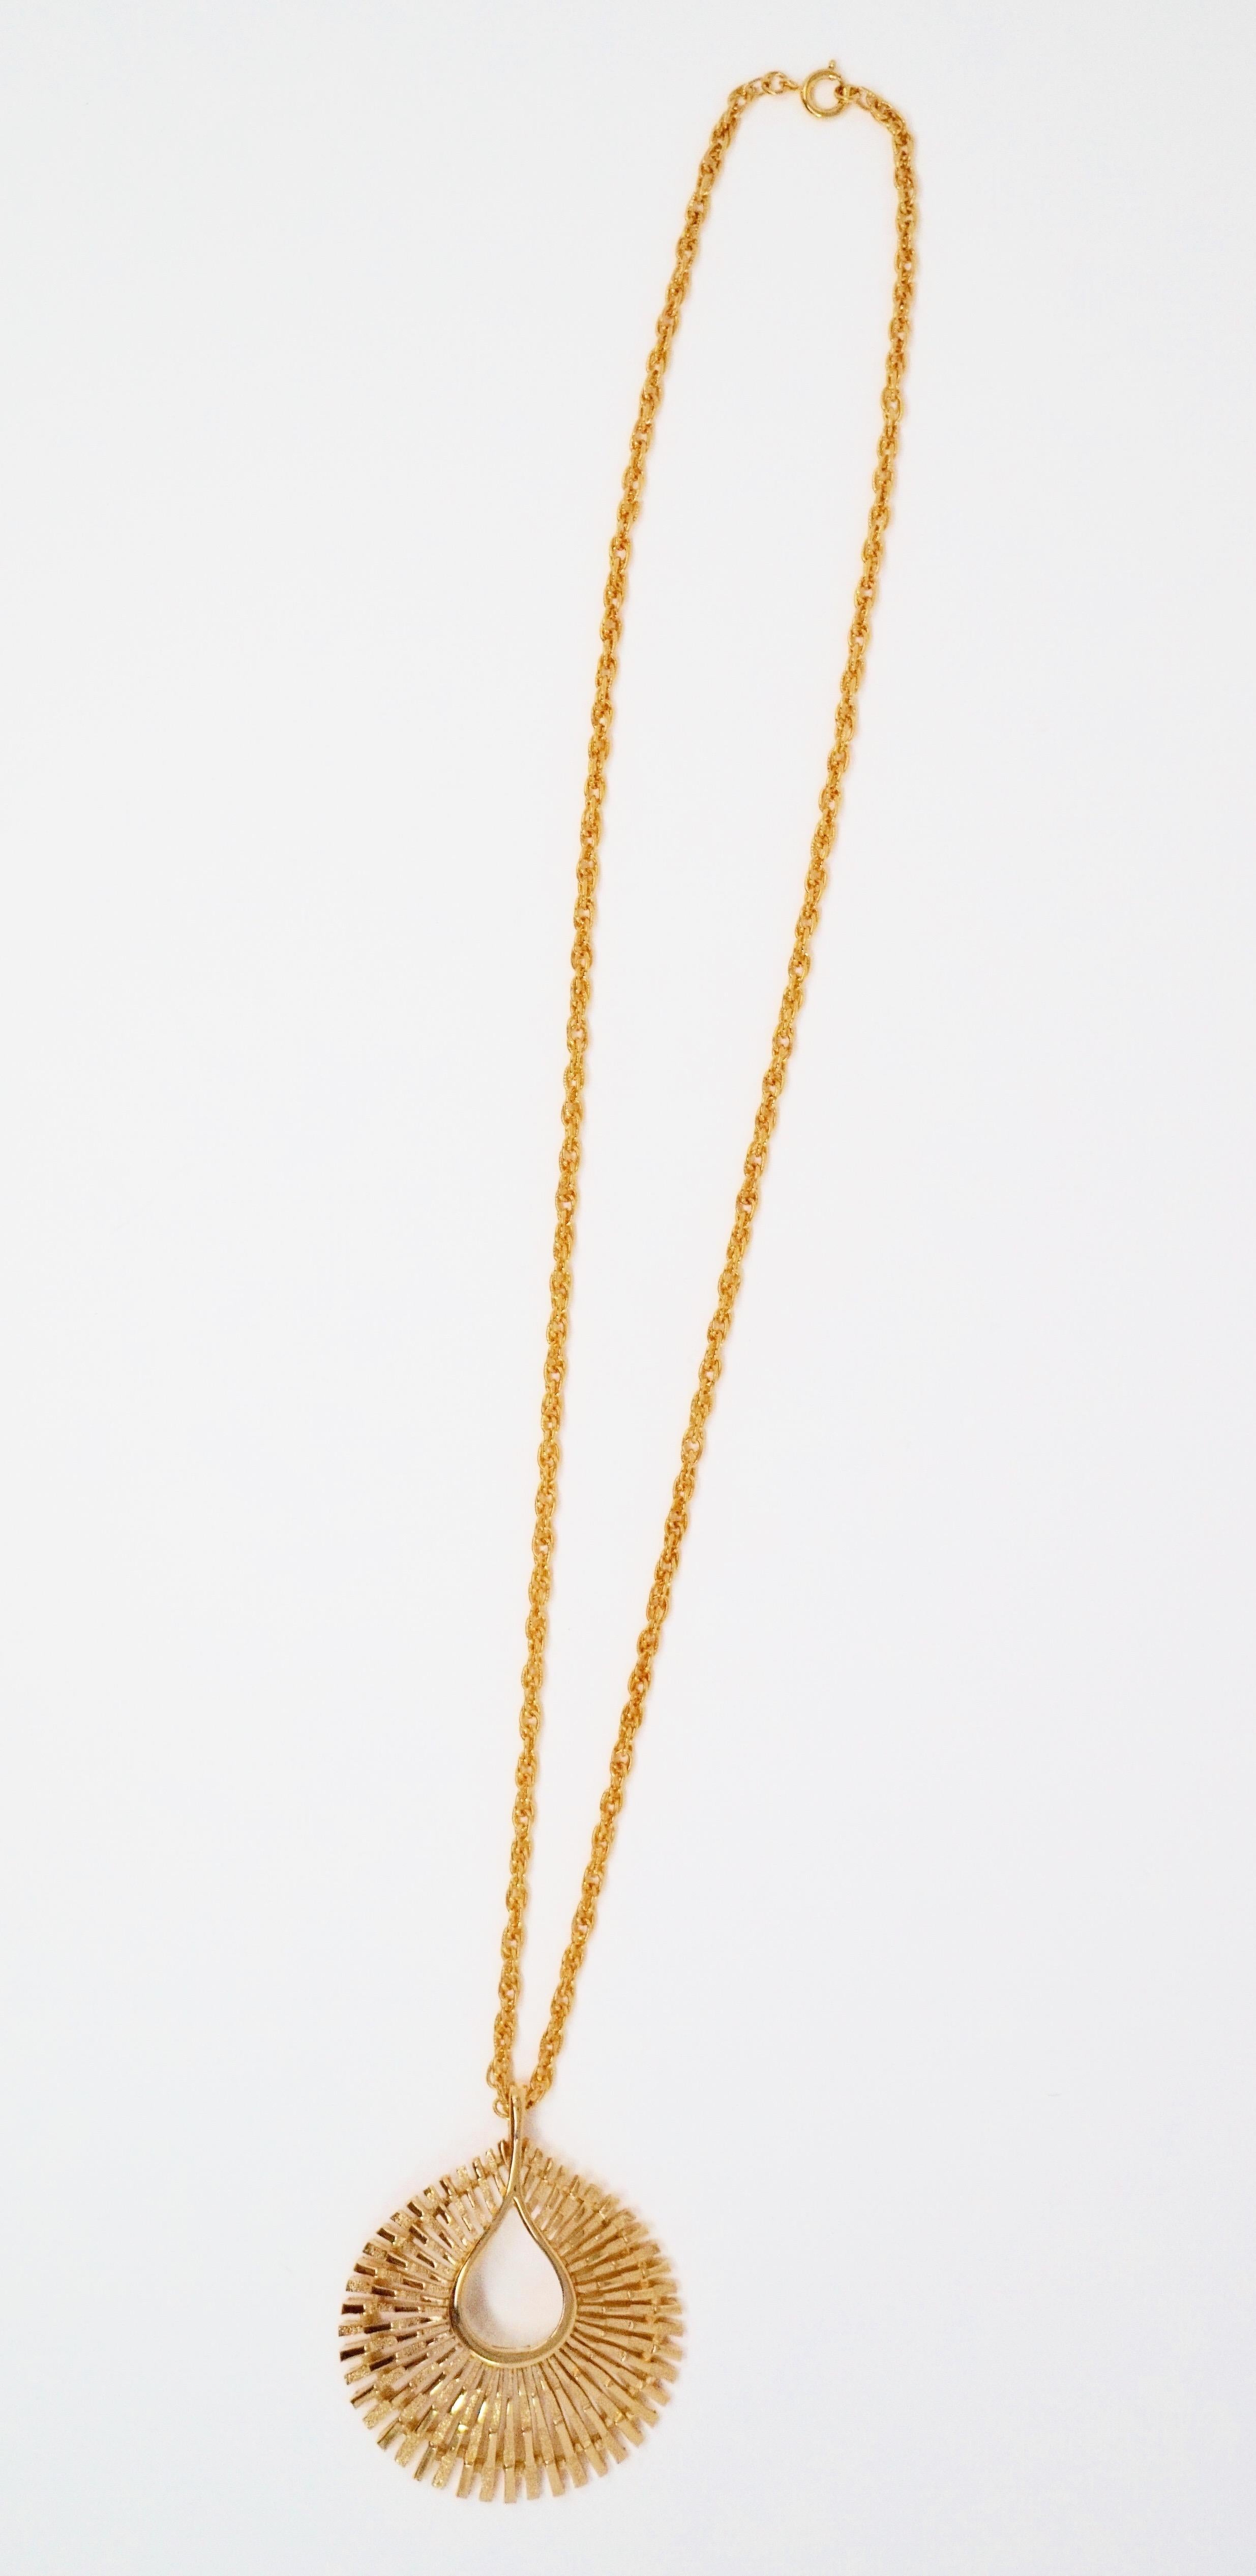 Modernist Crown Trifari Sunburst Atomic Style Pendant Necklace, circa 1955, Signed